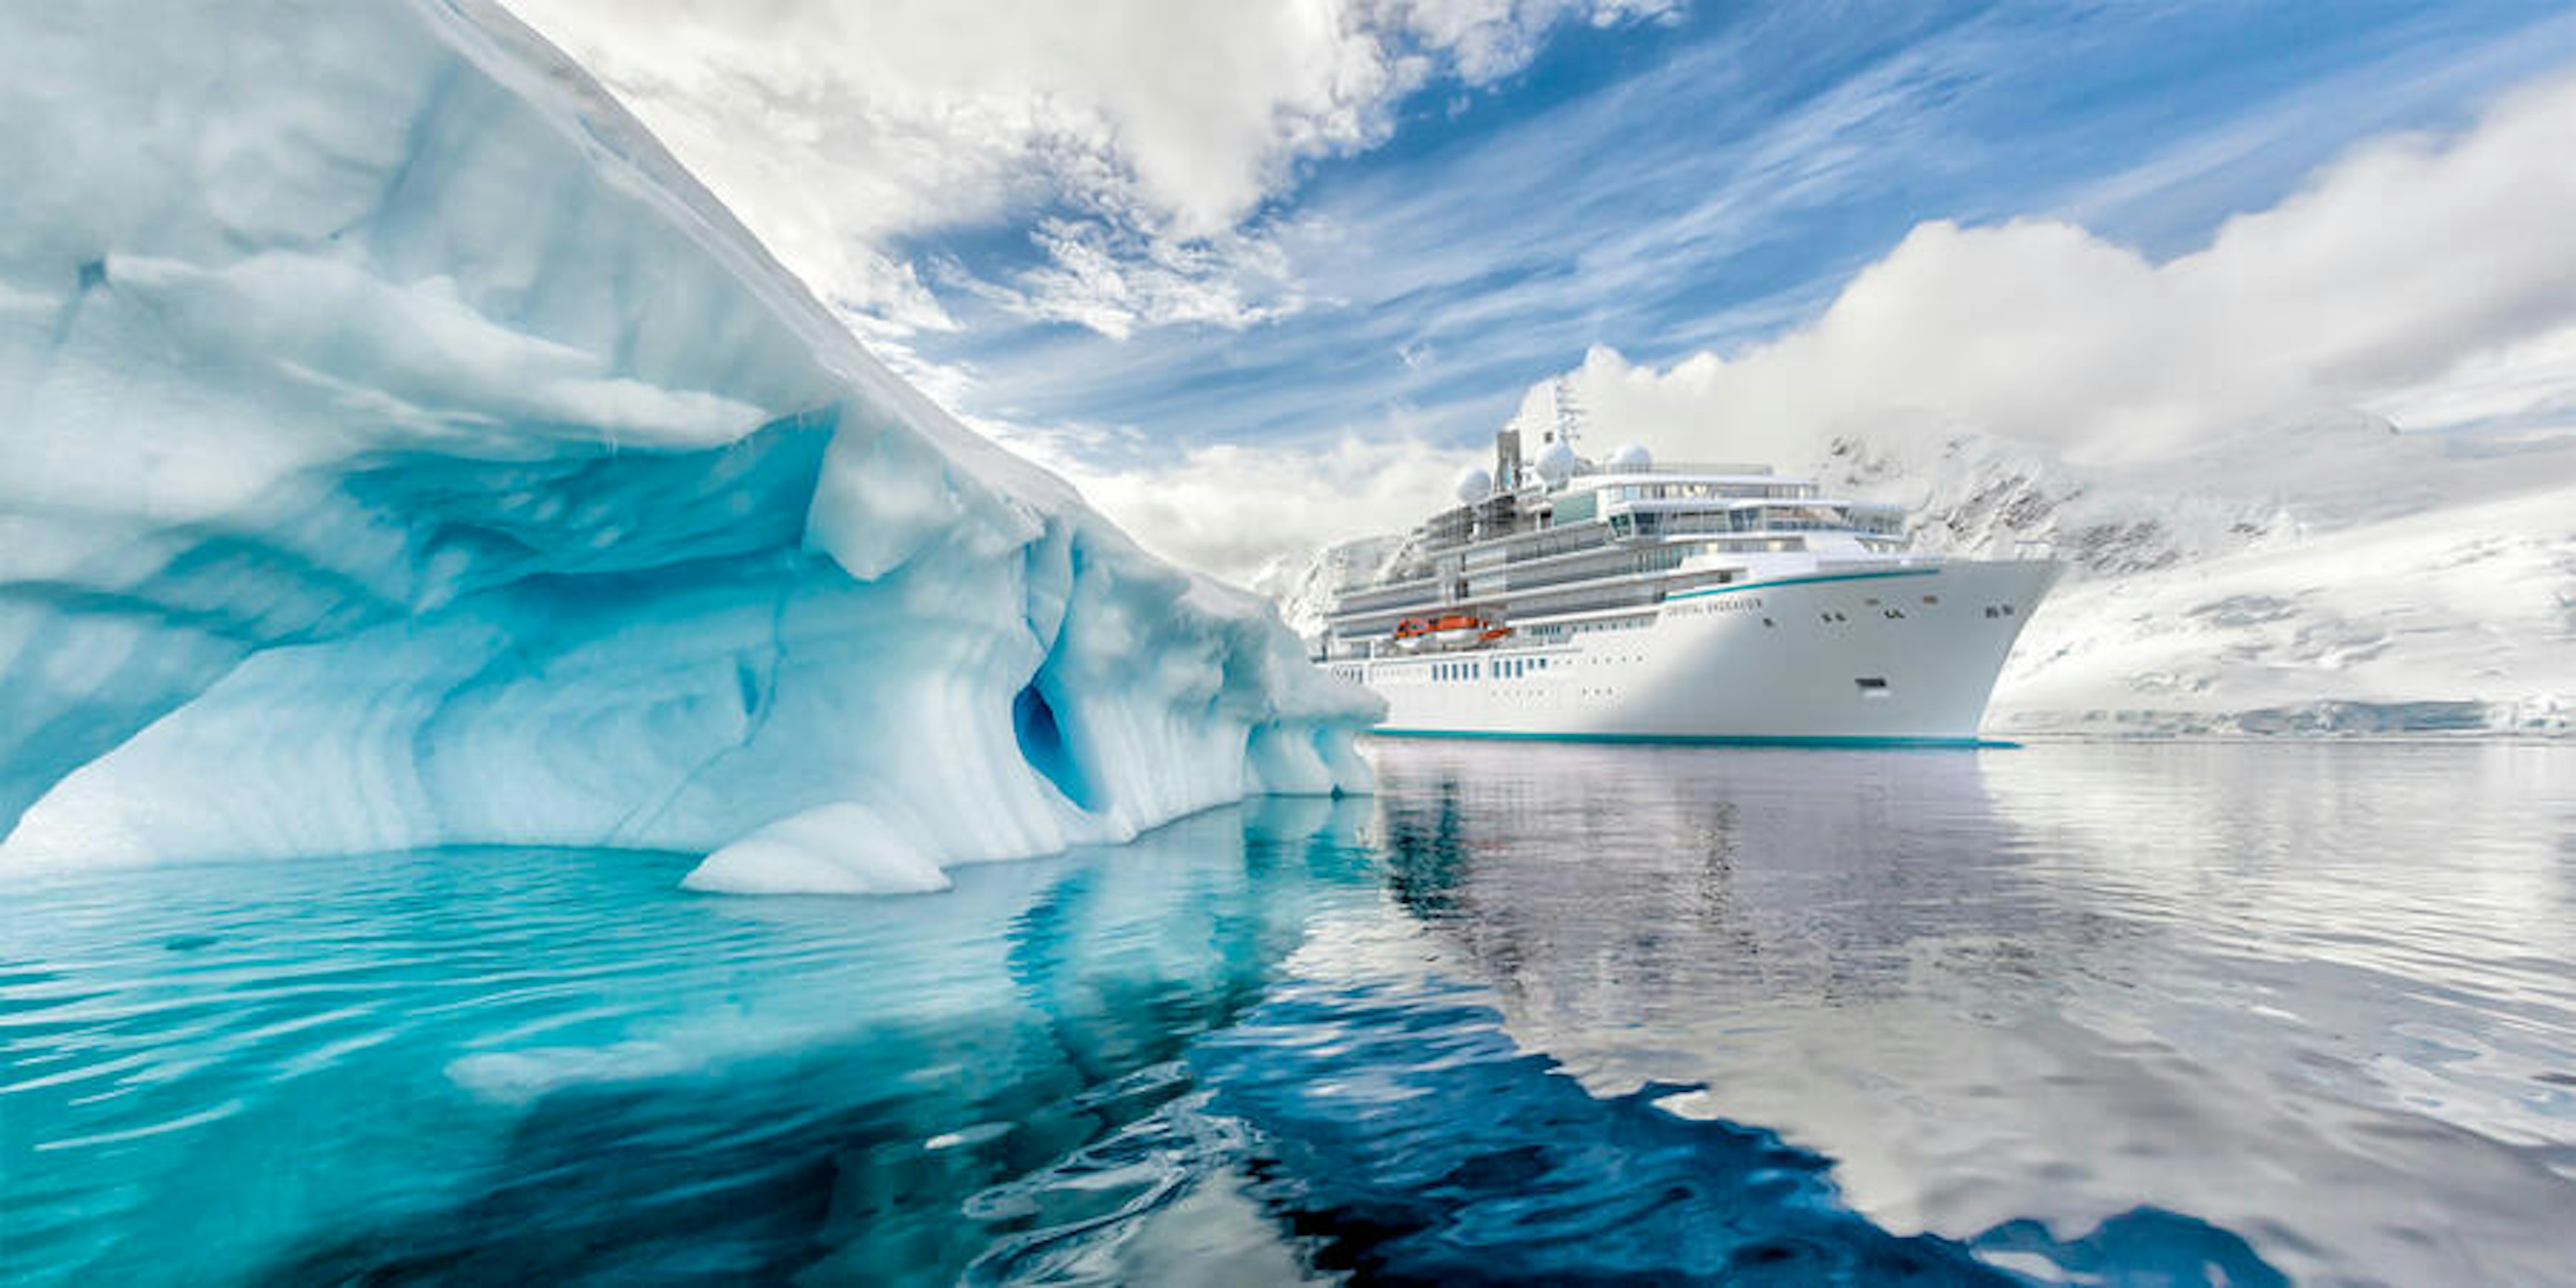 antarctic cruises from australia new zealand